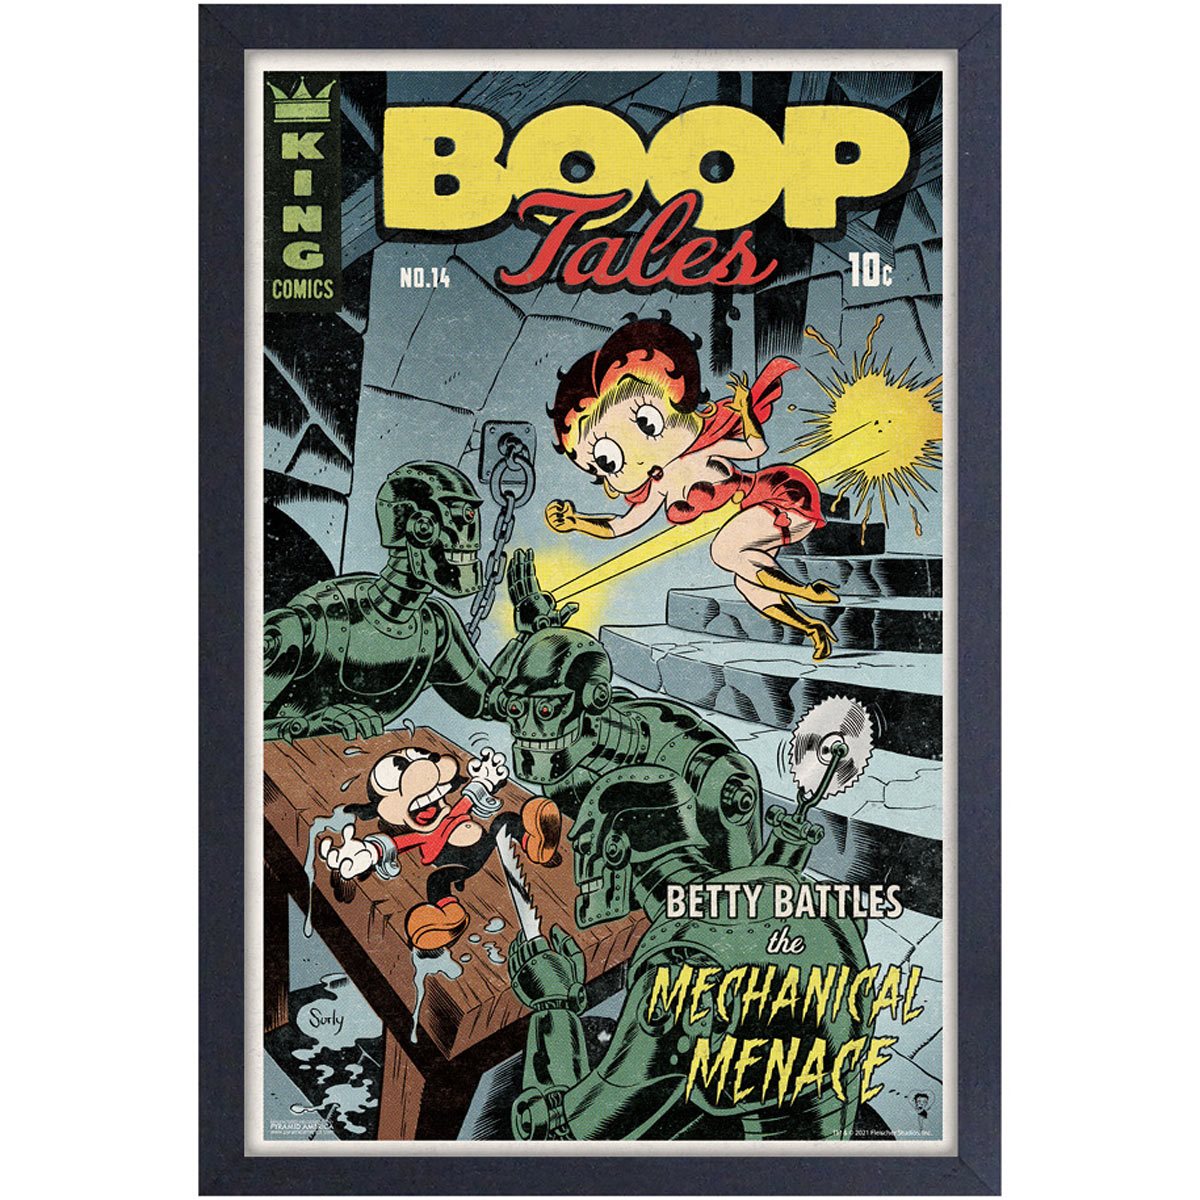 Betty boop comics